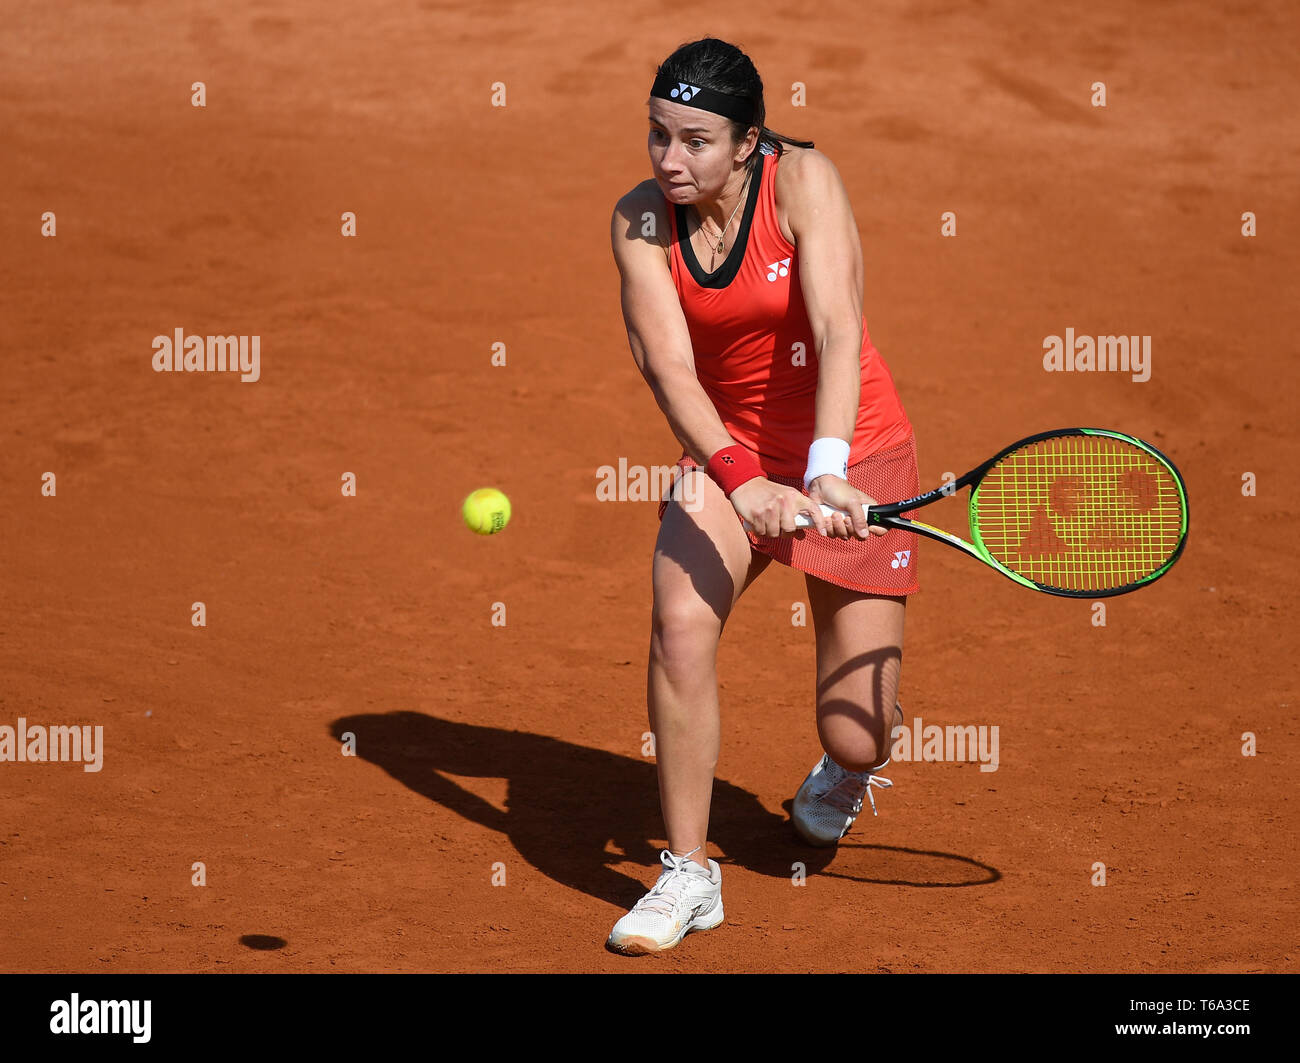 Prague, Czech Republic. 30th Apr, 2019. Tennis player Anastasija Sevastova  (Latvia) is seen during match against Anastasia Potapova (Russia) within  the 1st round of the J&T Banka Prague Open, on April 30,